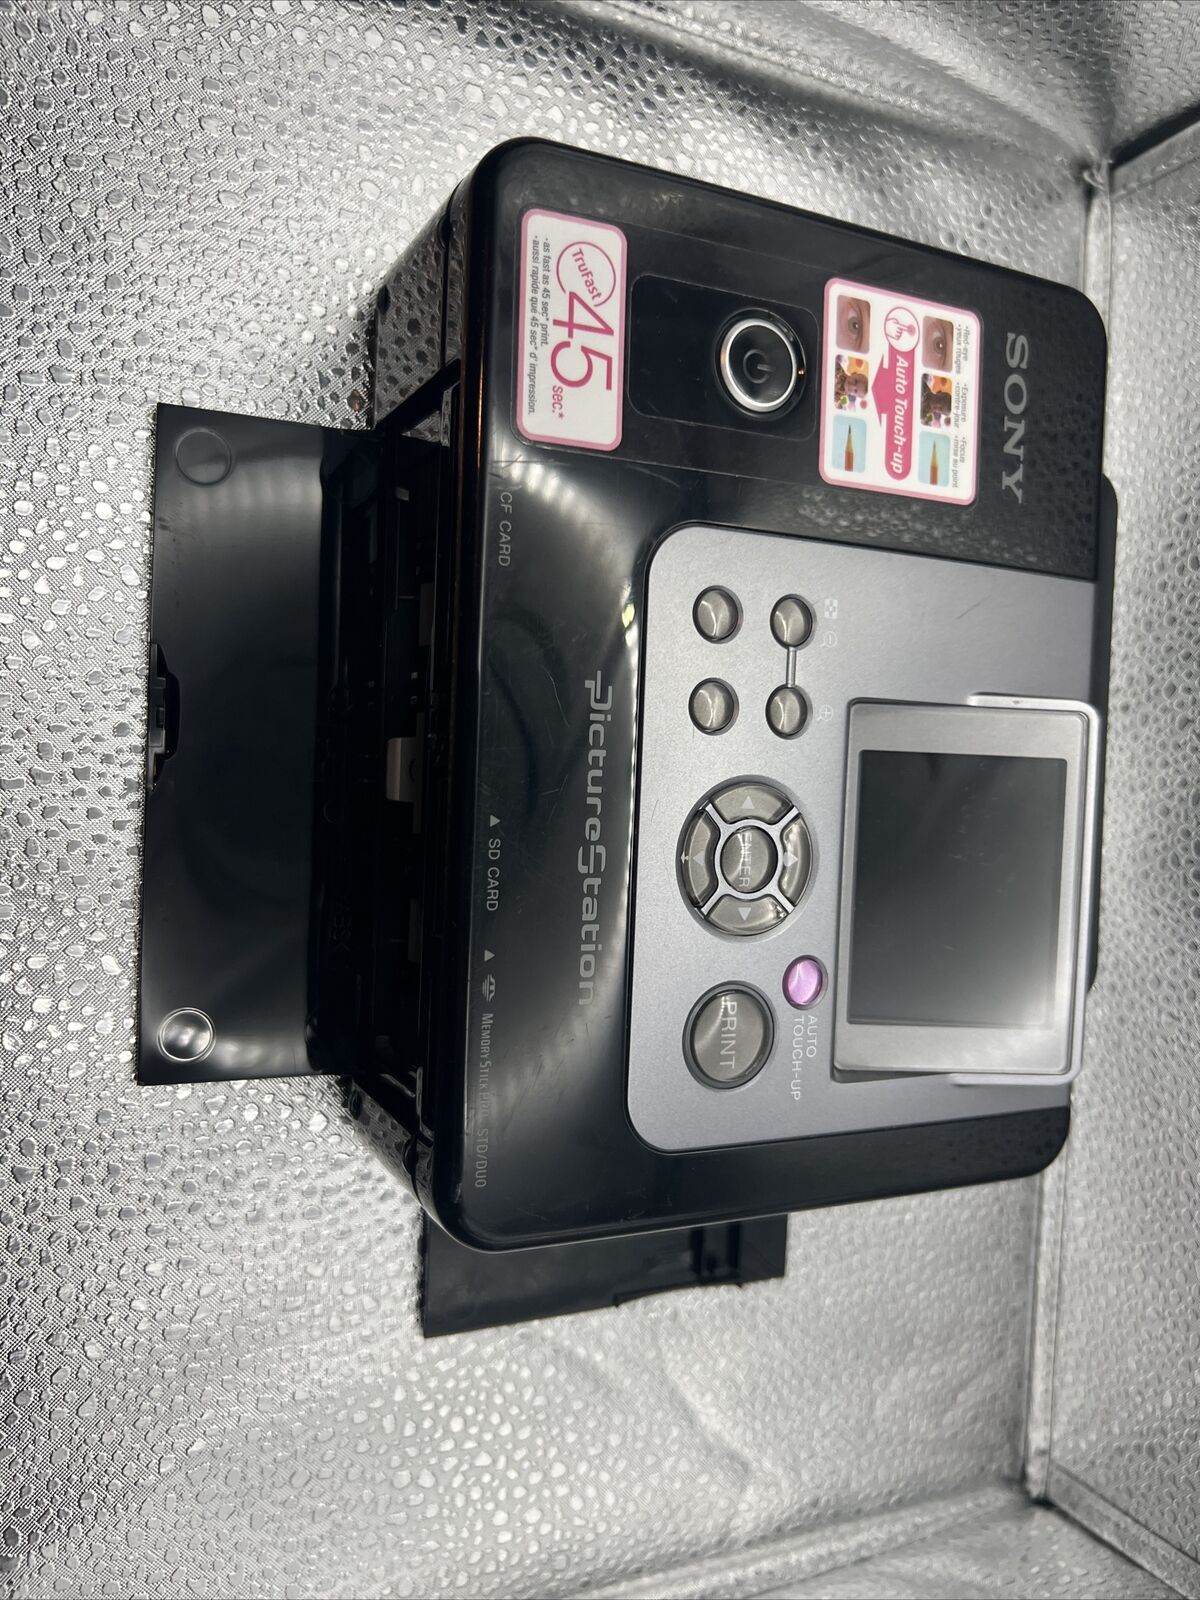 Sony DPP-FP 70 photo printer